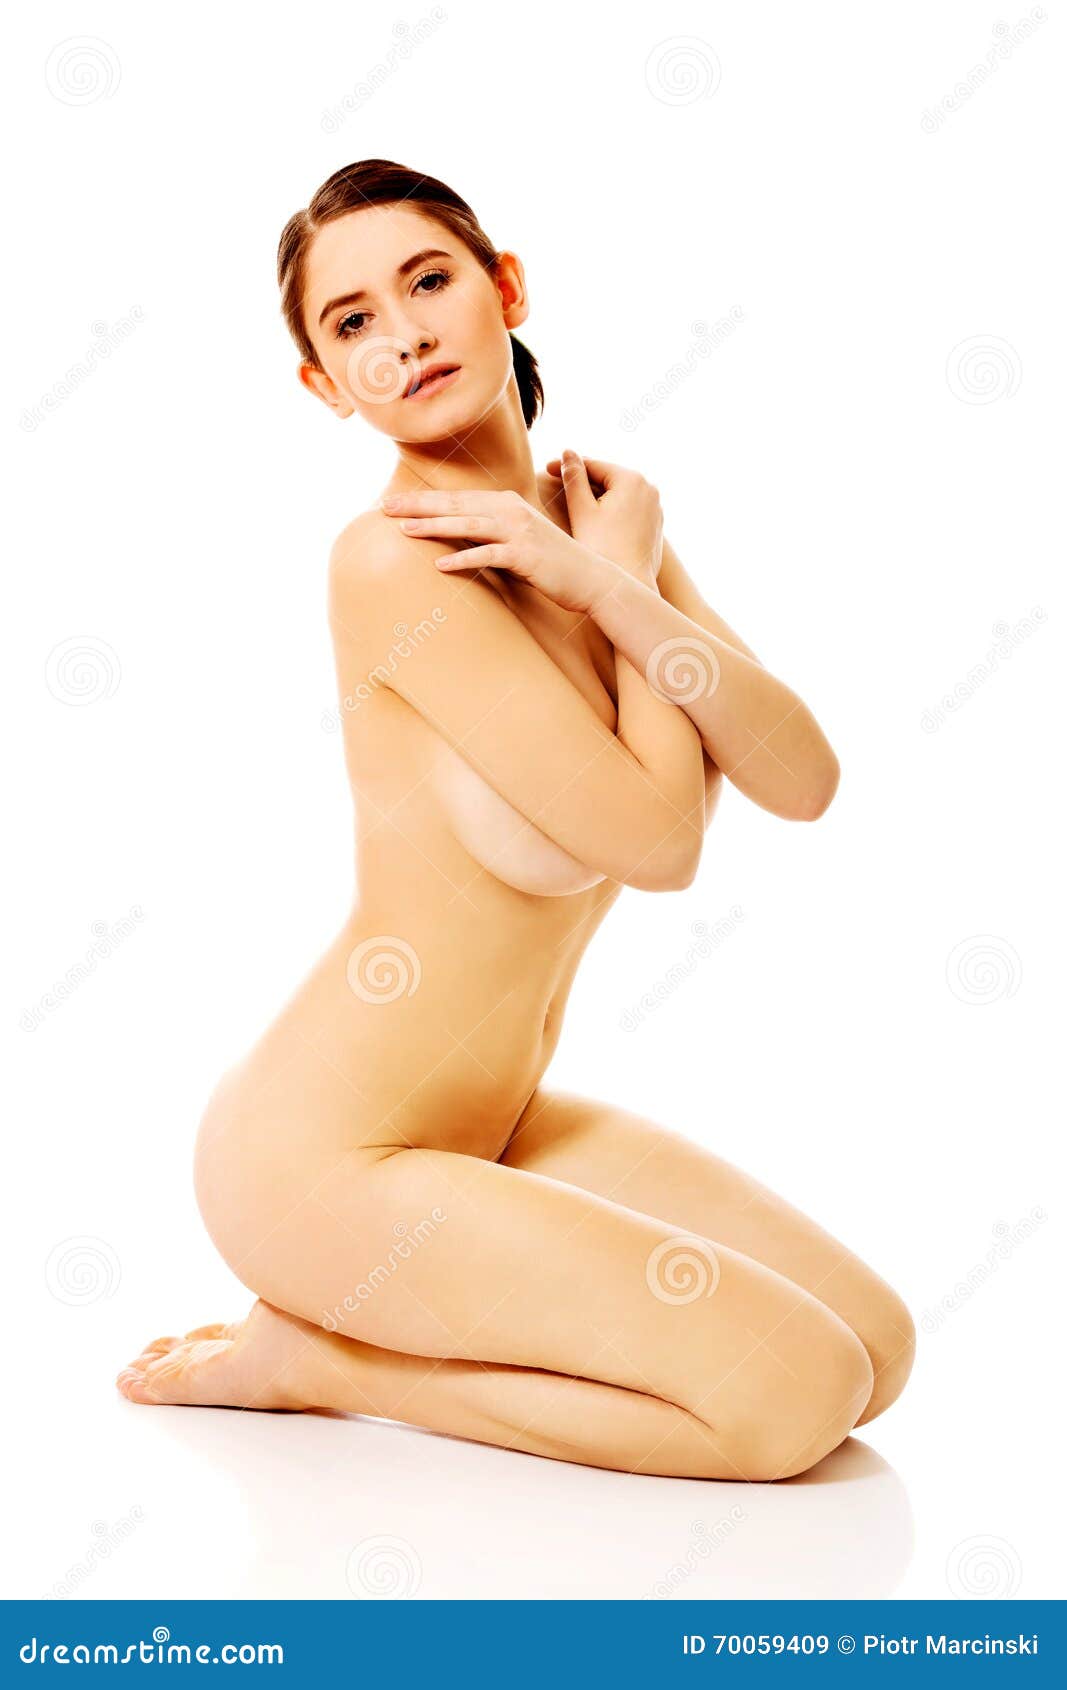 avis adkins add photo on her knees naked